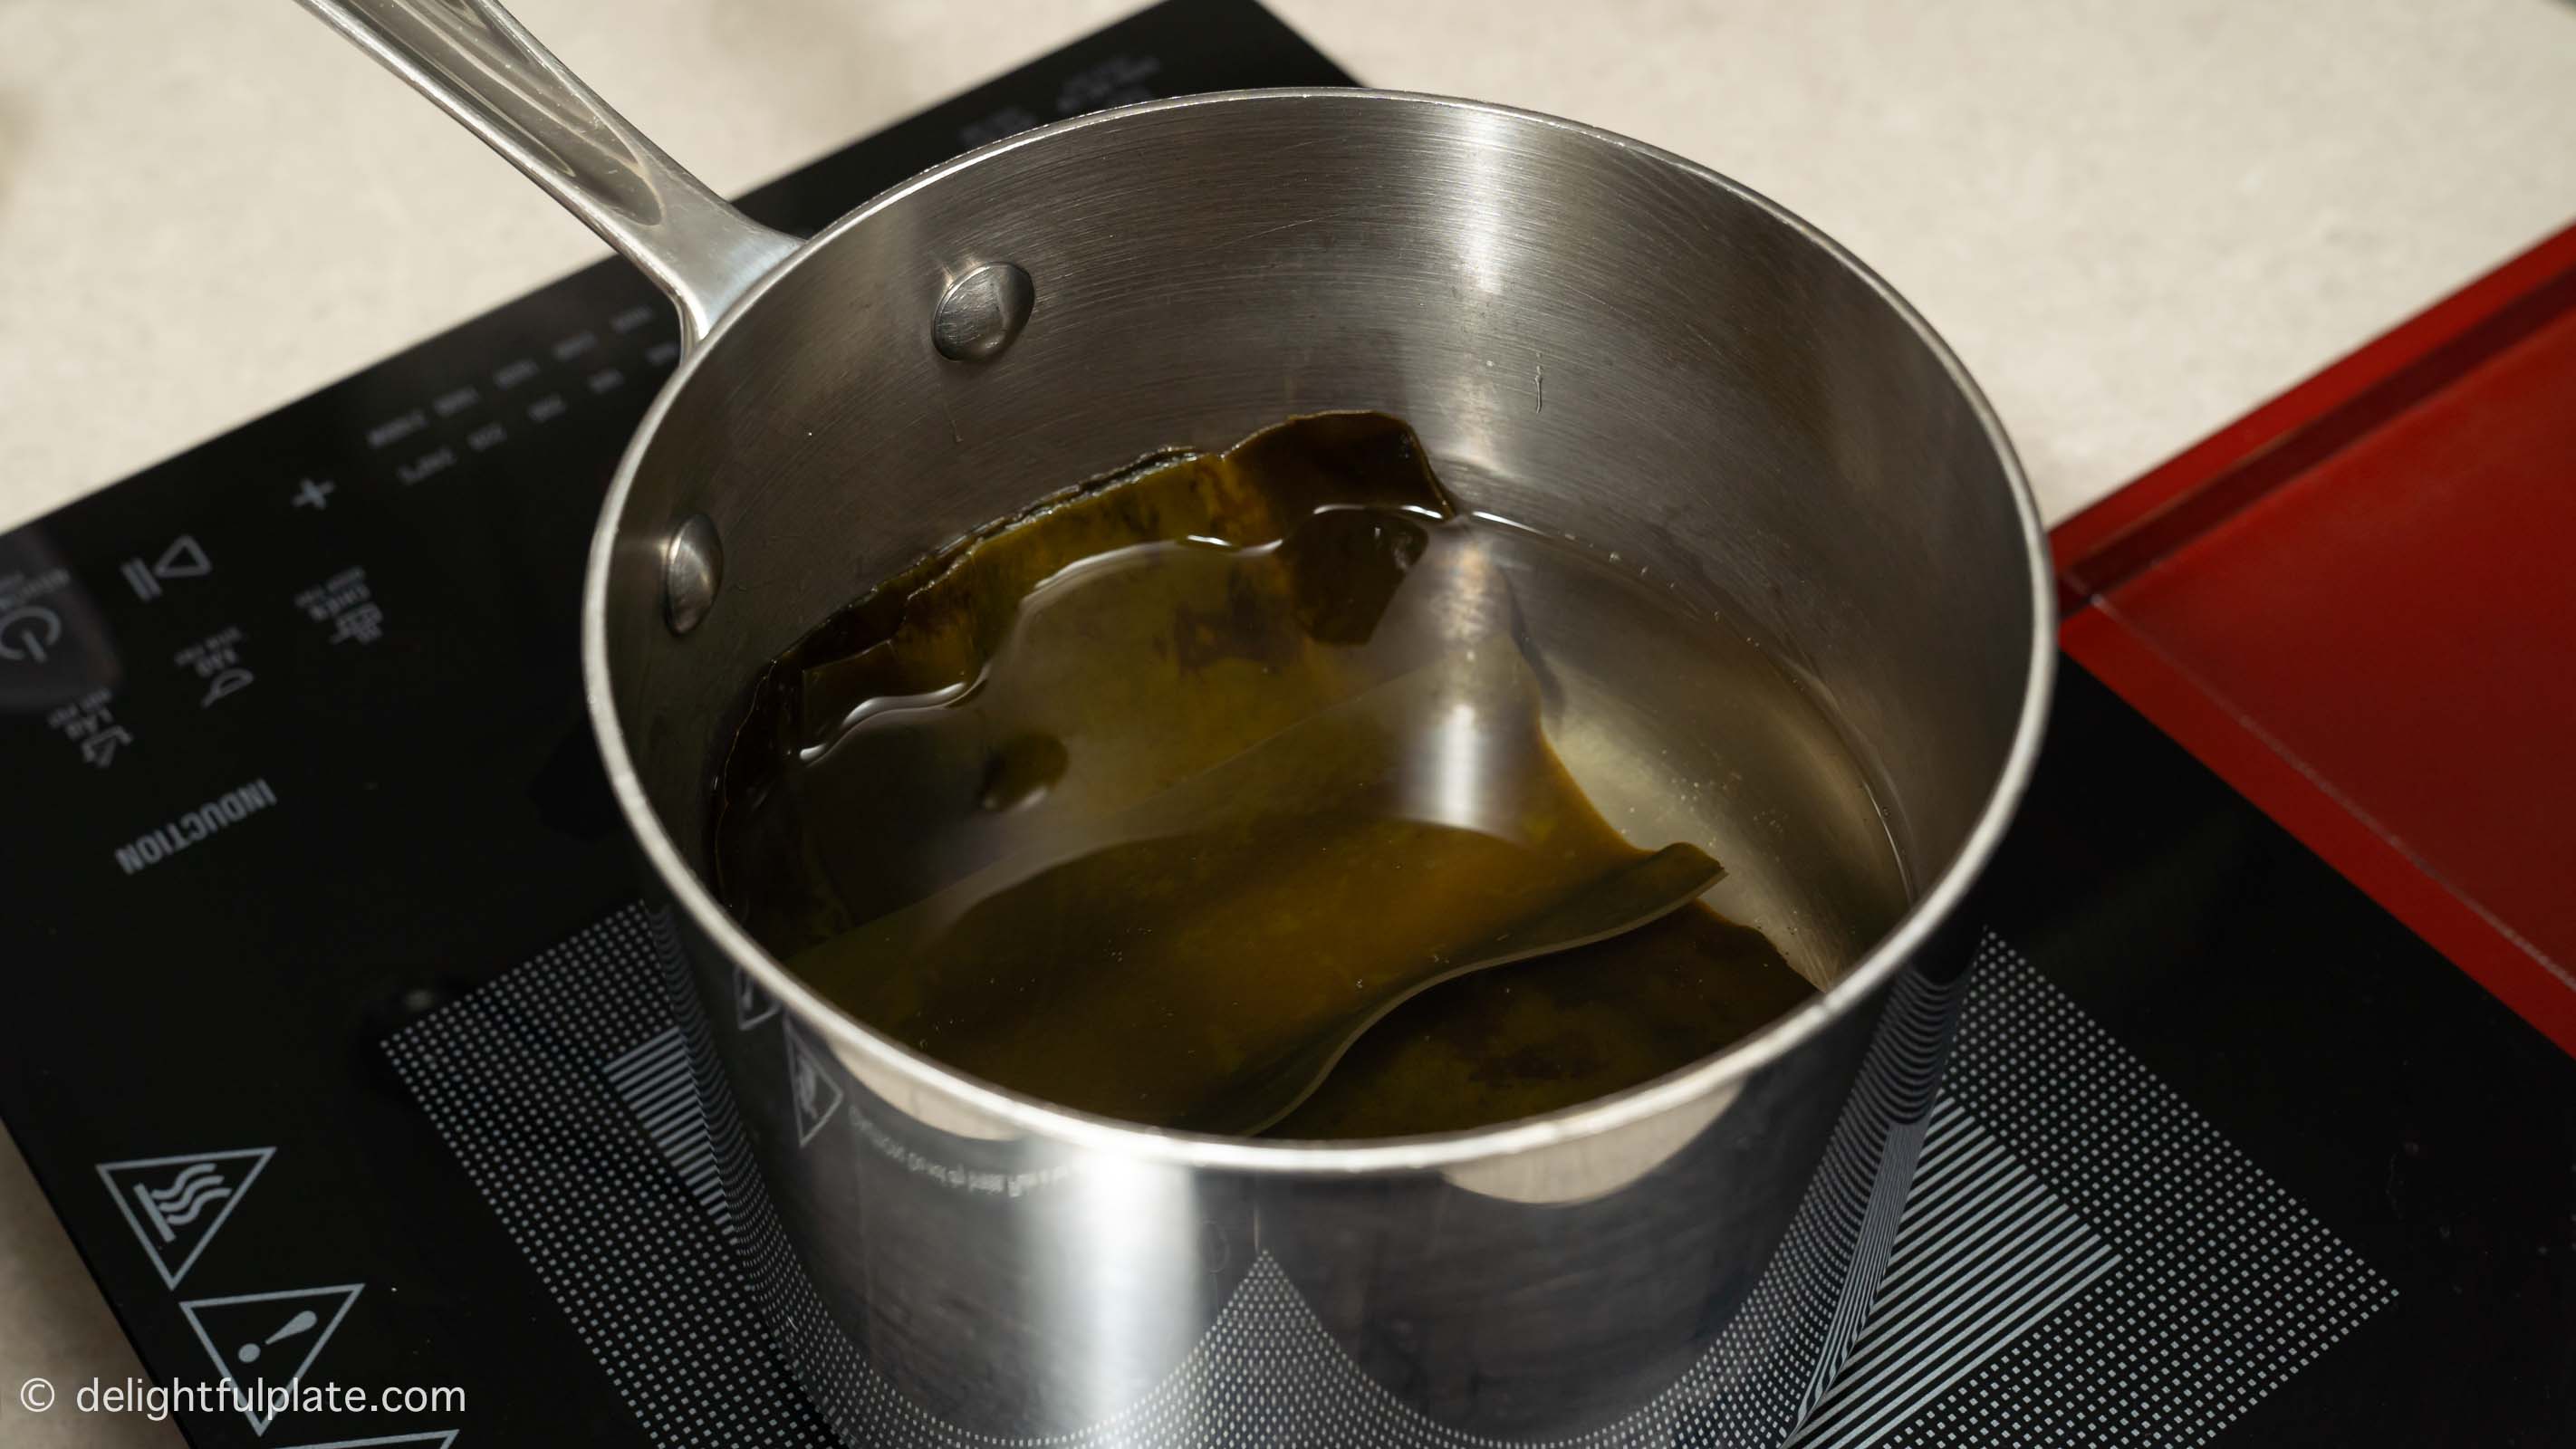 heating dried kelp and water in a pot to make kombu dashi.